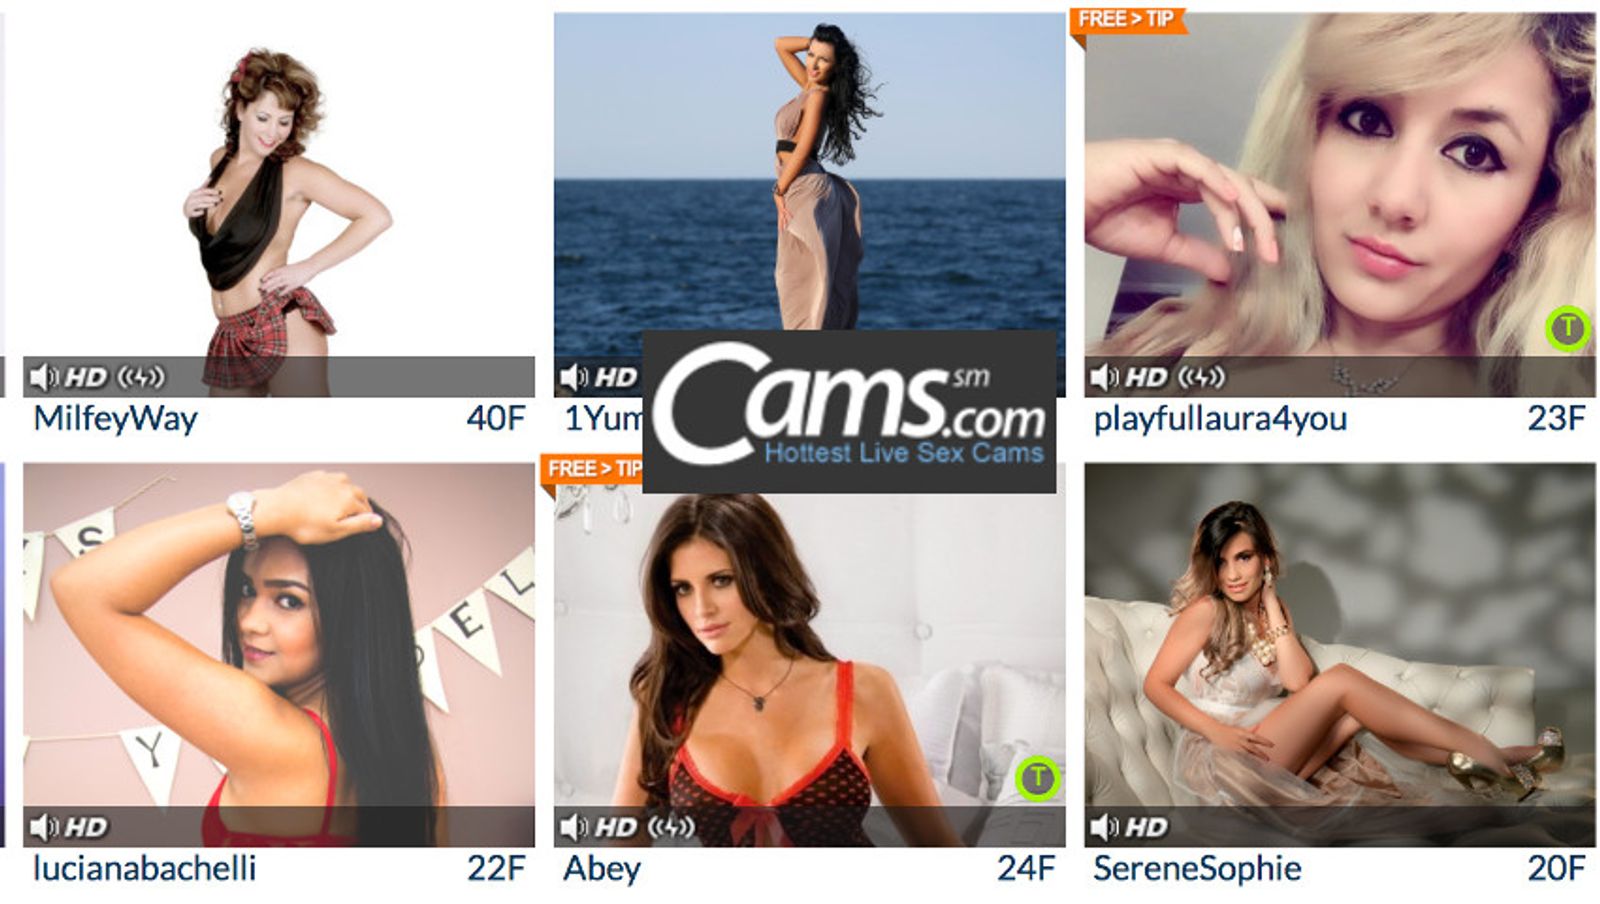 Cams.com Ramps Up International Model Recruitment Efforts